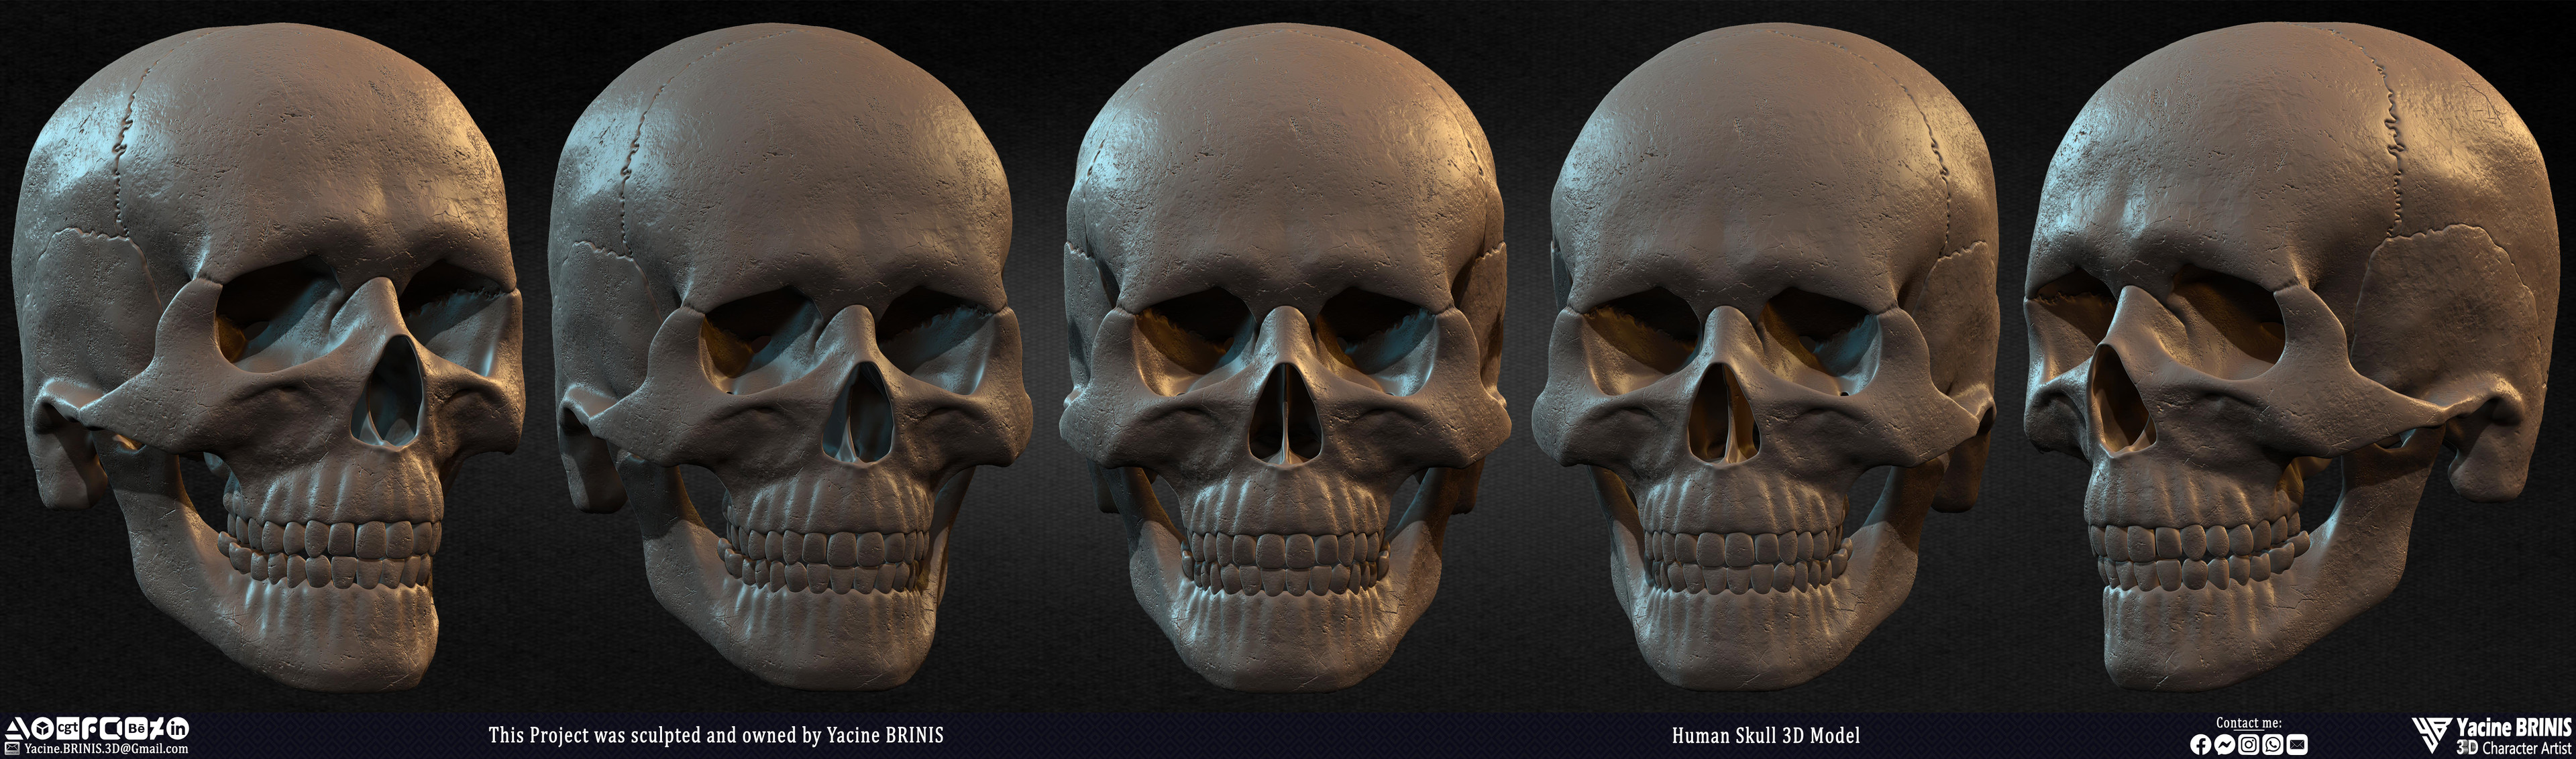 Human Skull 3D Model sculpted by Yacine BRINIS 003